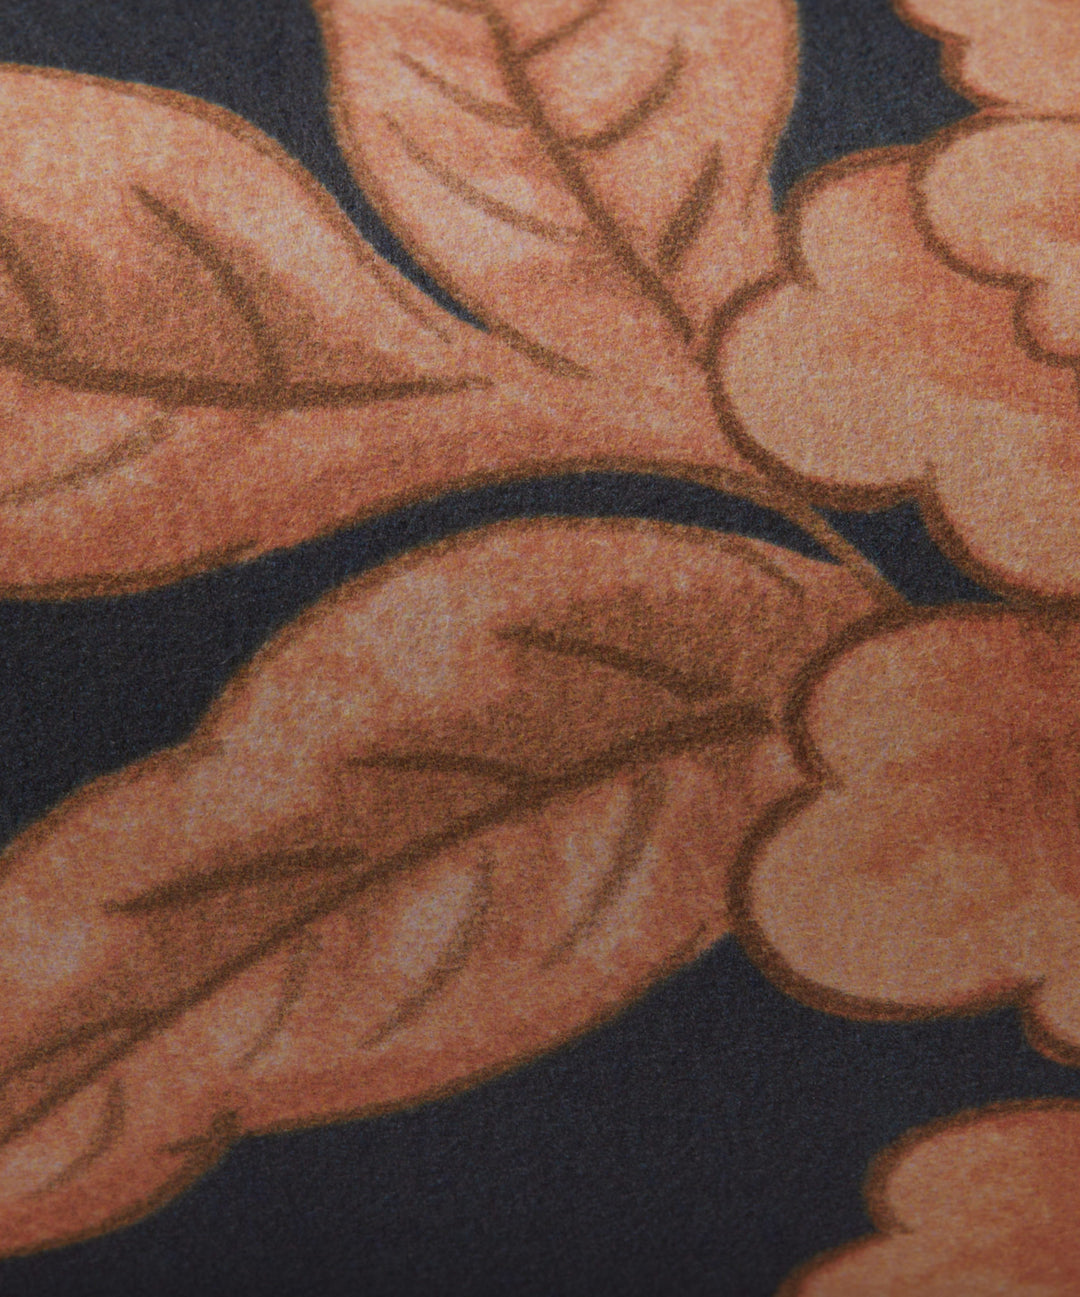 liberty-botanical-atlas-porcelain-trail-wallpaper-ink-blue-copper-rust-floral-trail-hallway-panelling